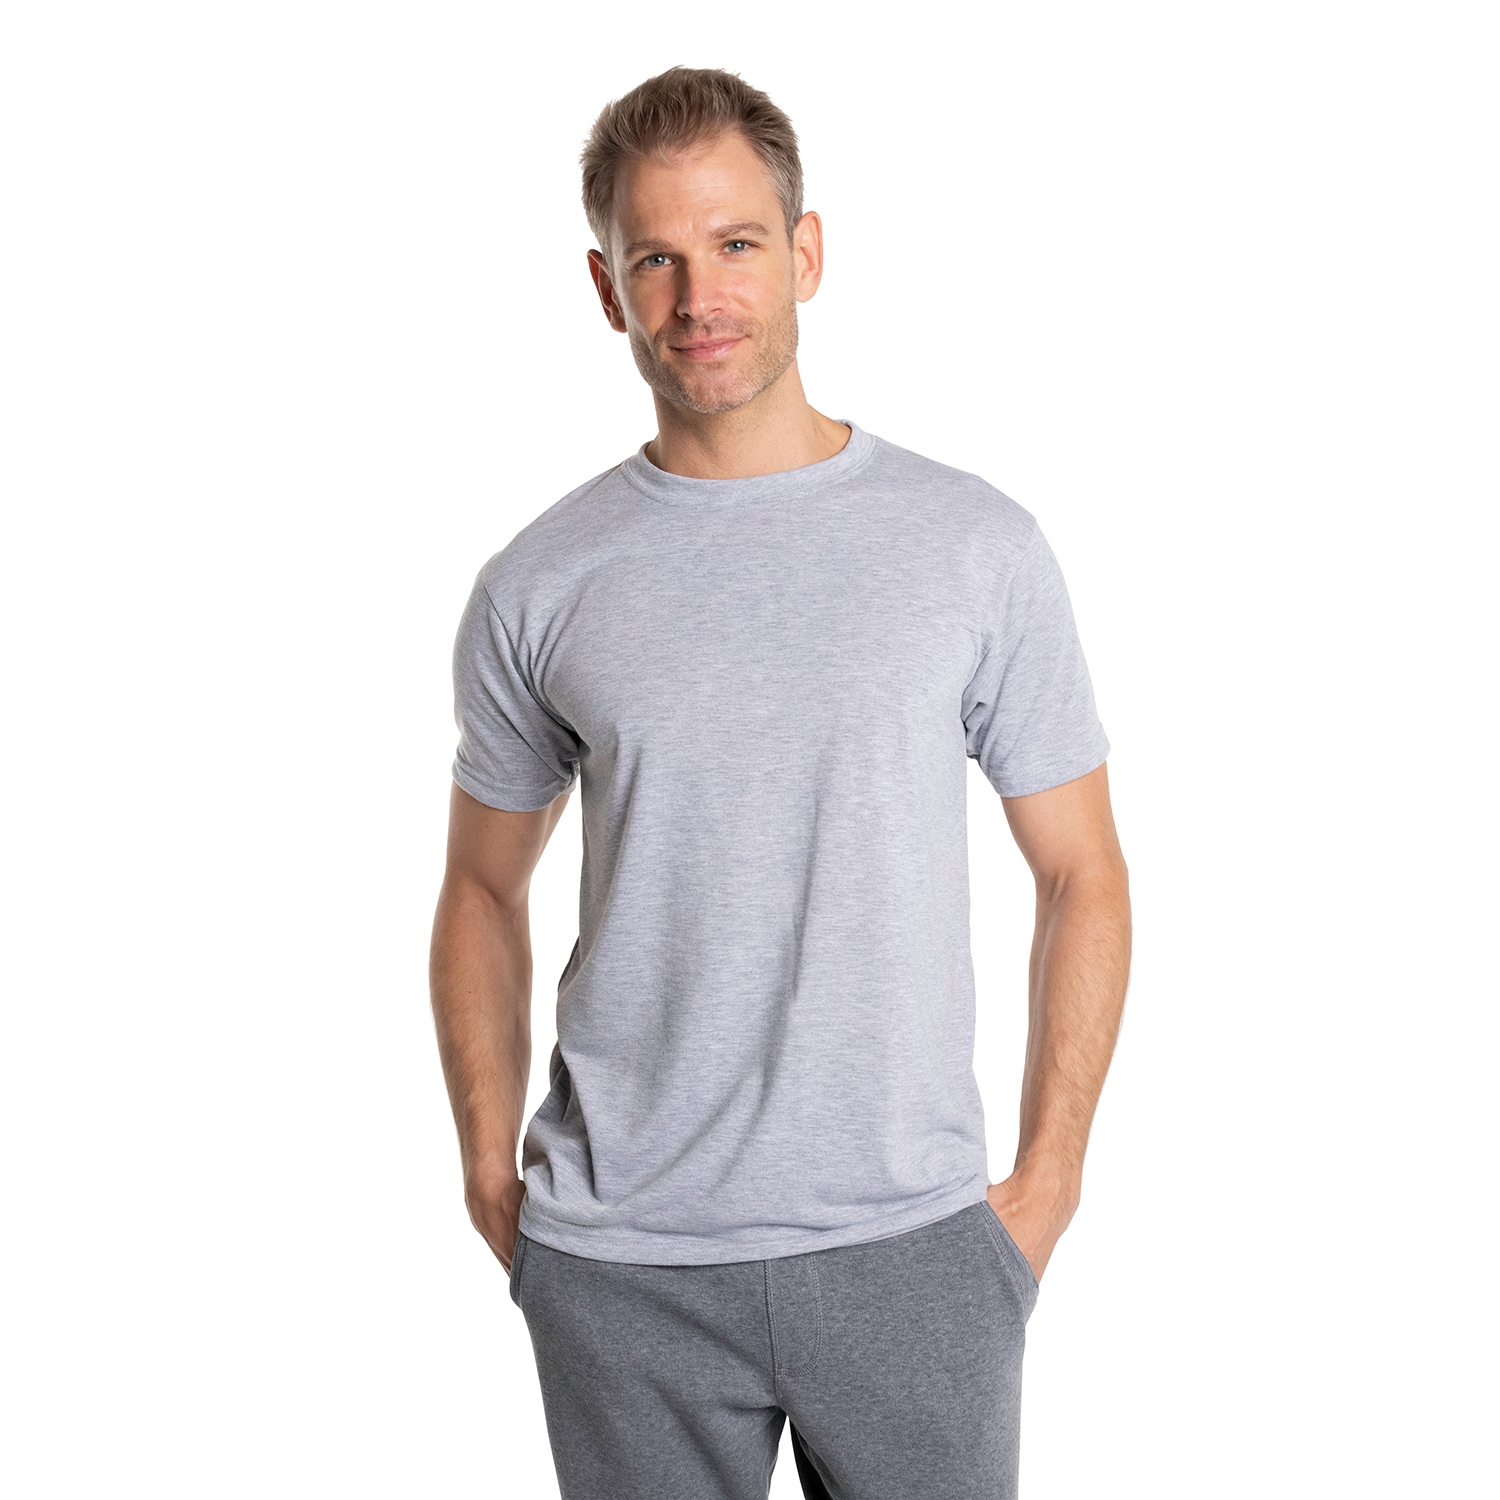 Rhinestones Men's T-shirts, New Quality Cotton T-shirt